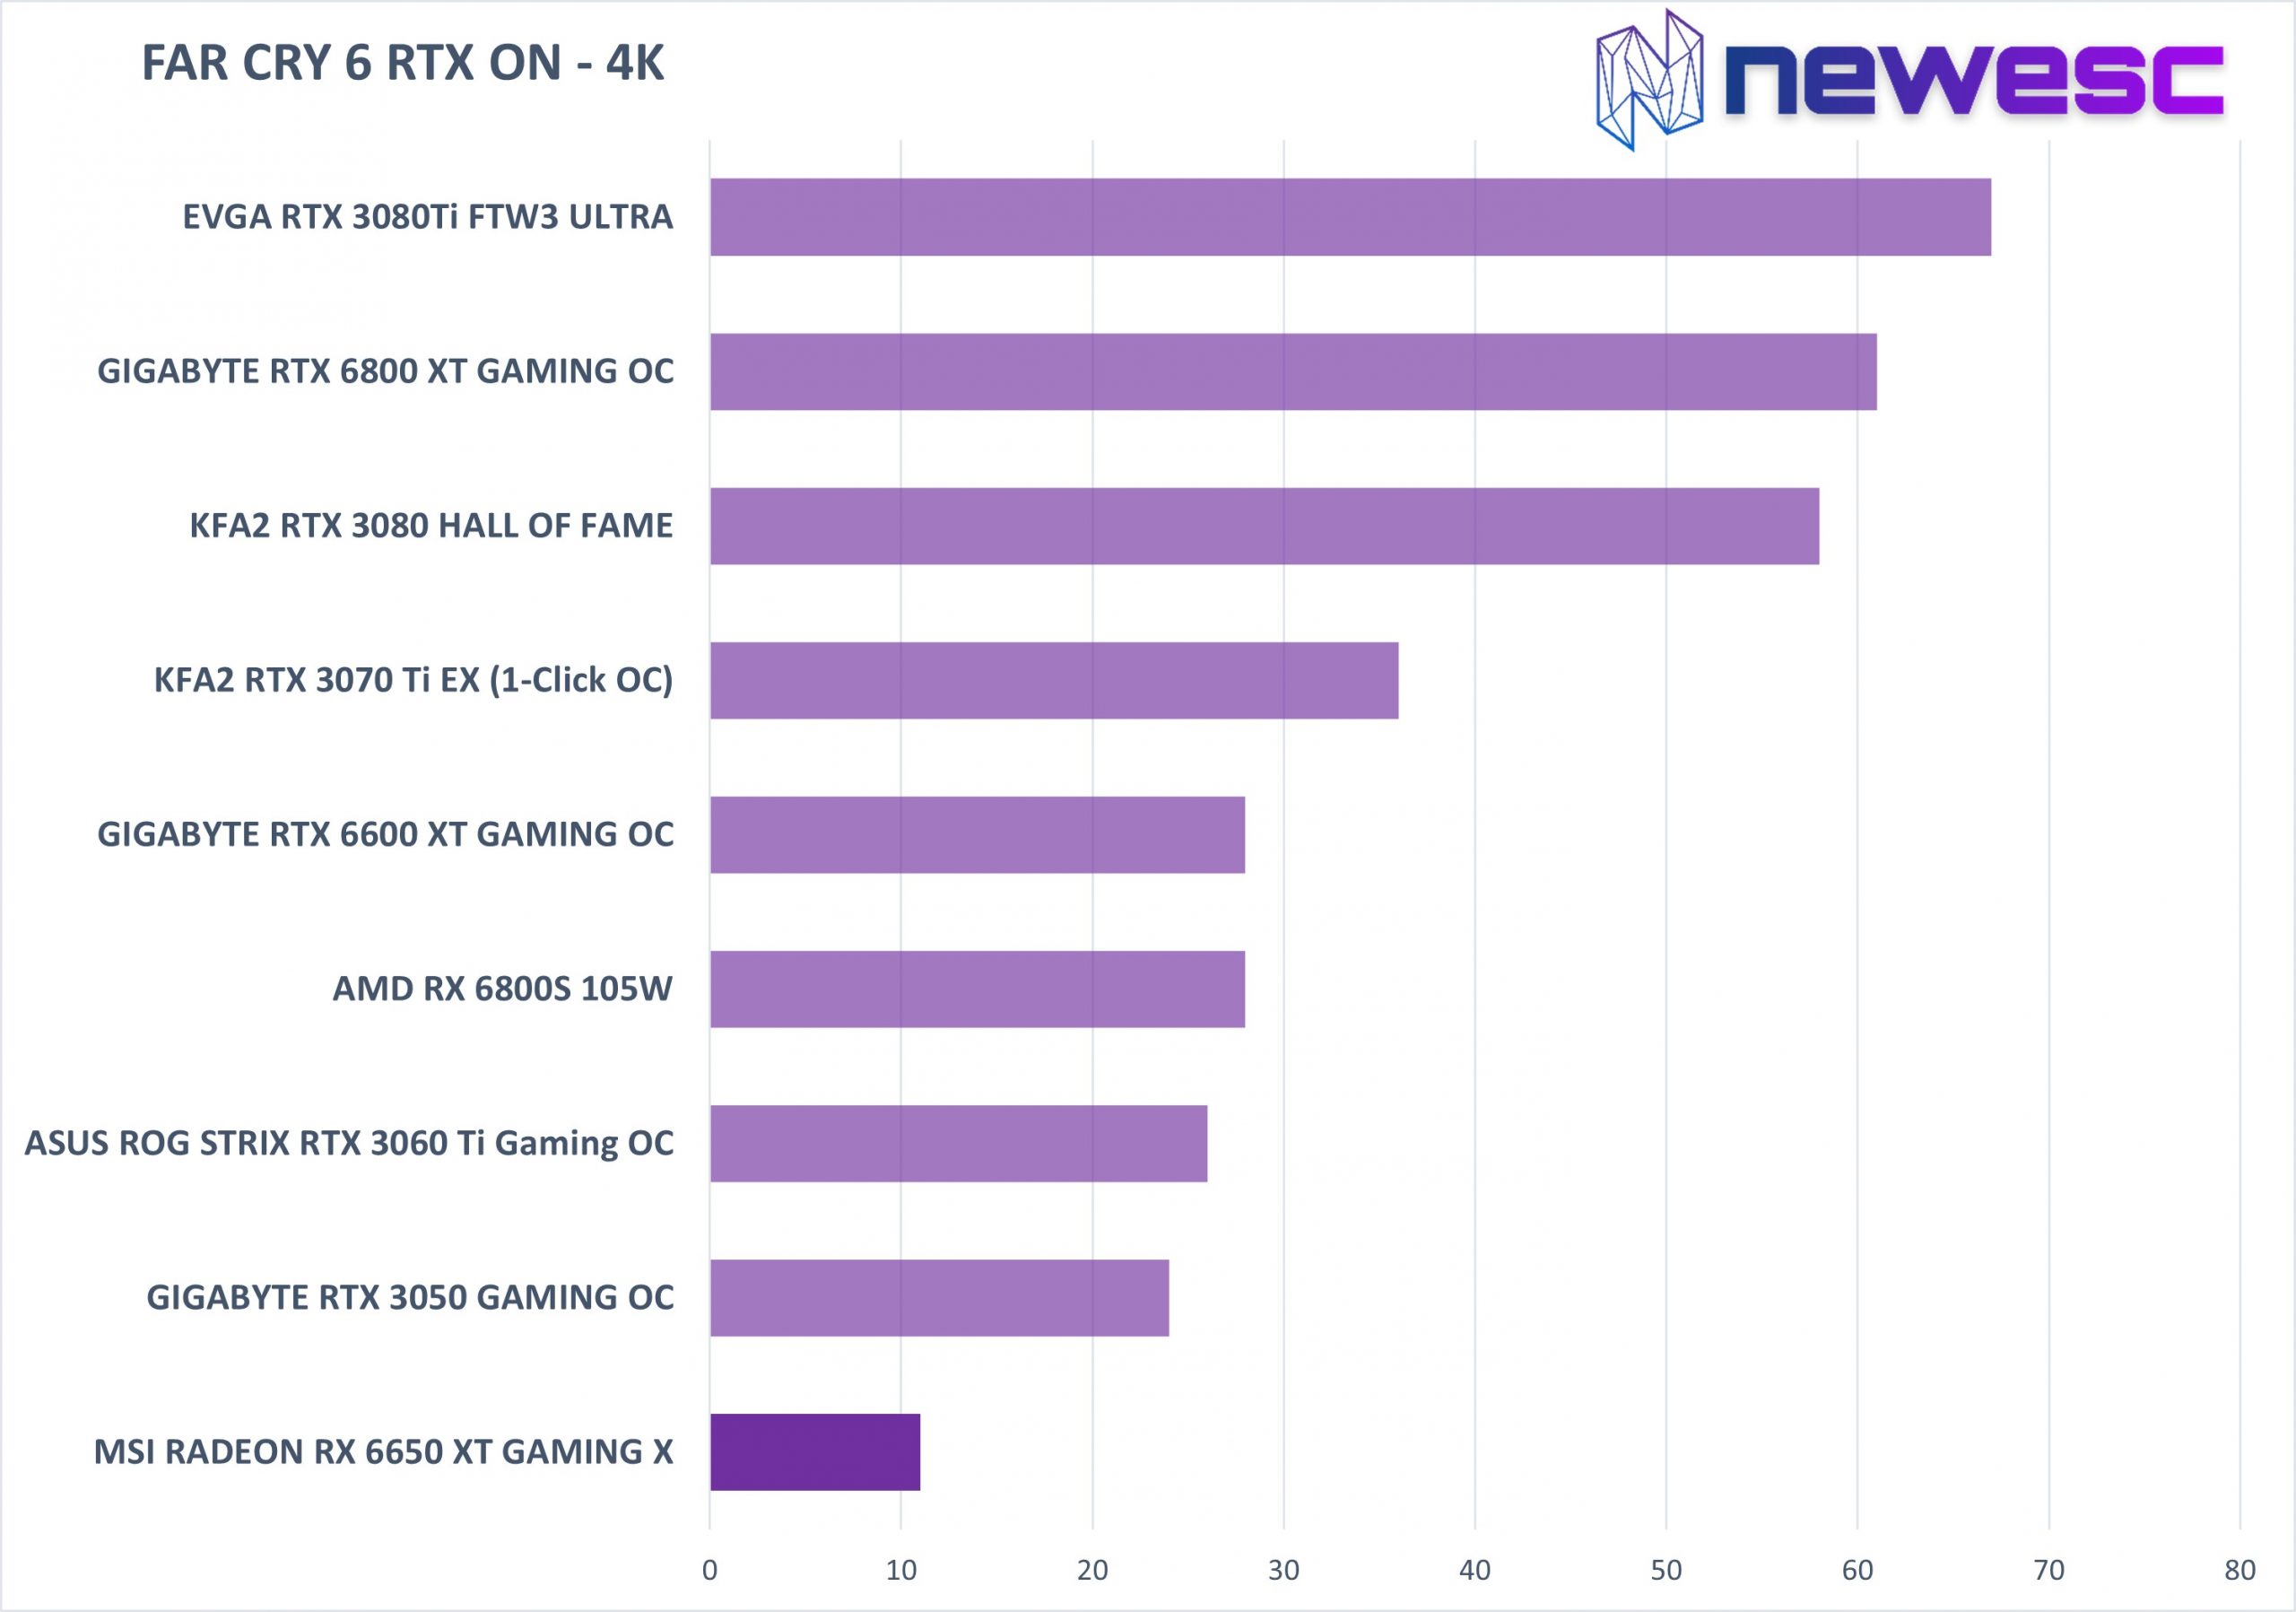 REVIEW MSI RADEON RX 6650 XT GAMING X FC6 RTX 4K